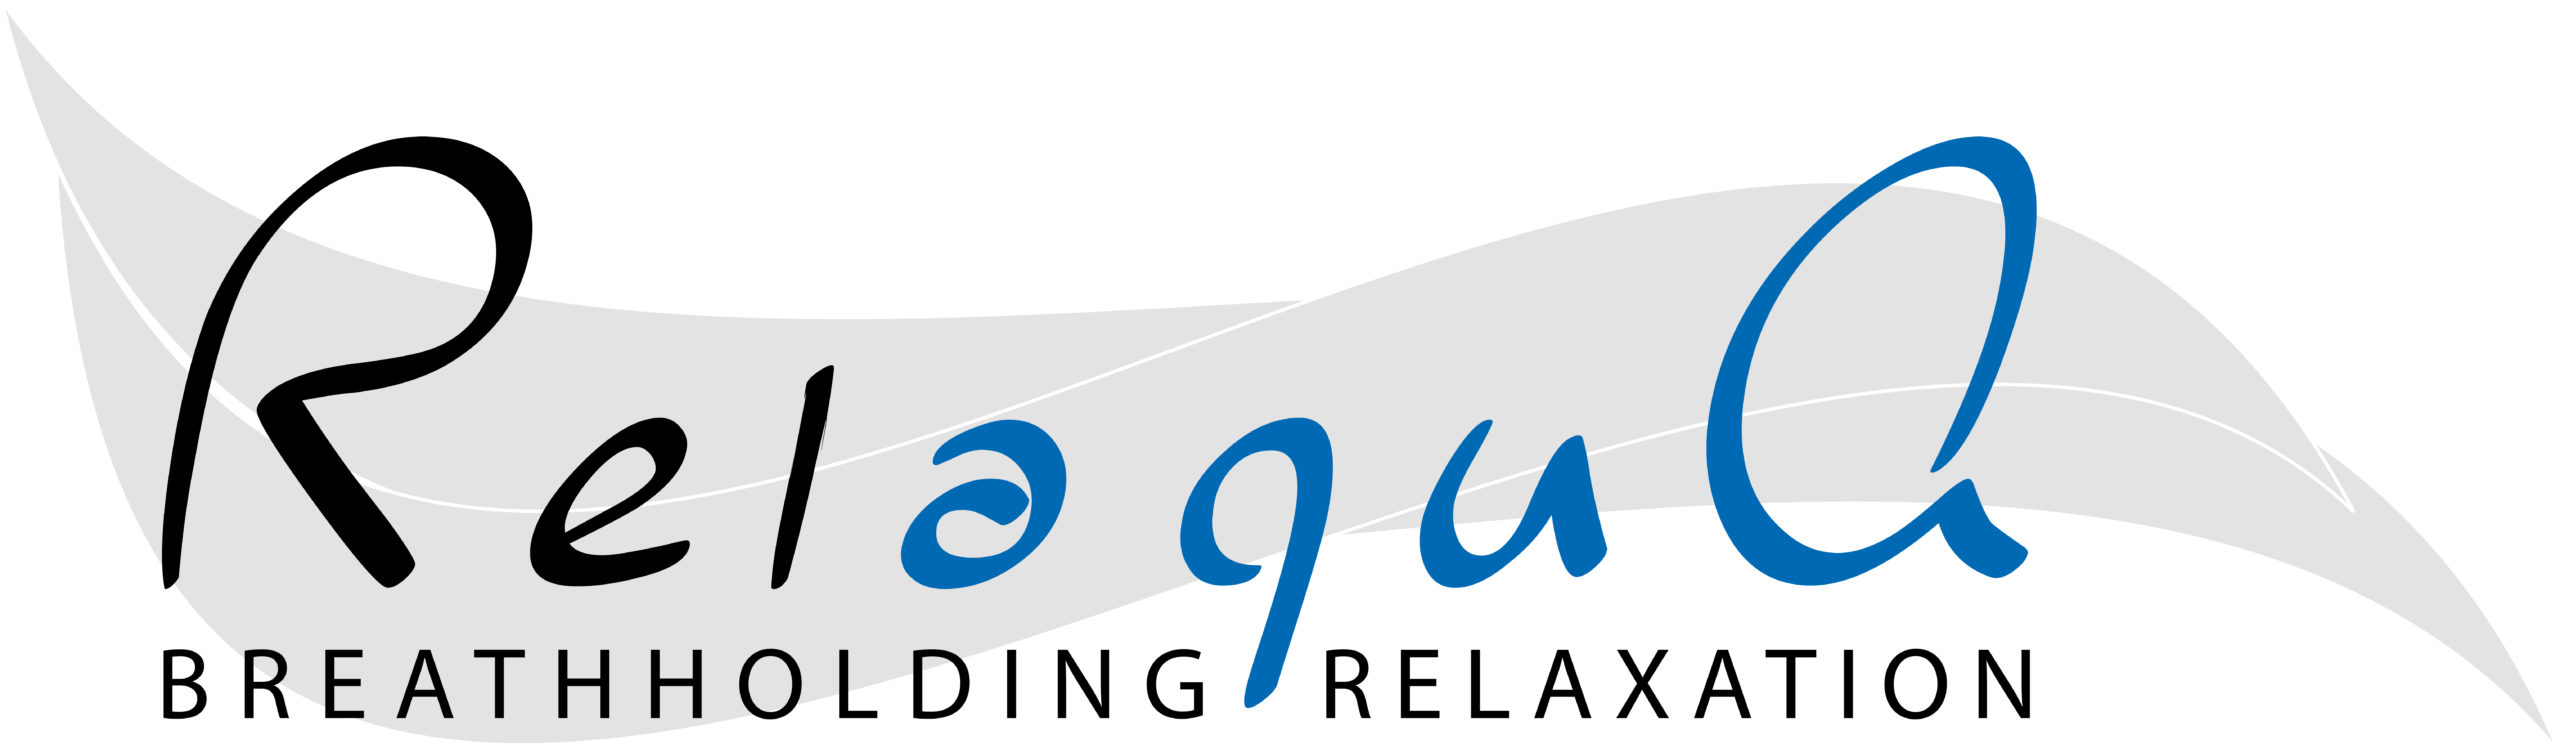 DK-Relaqua Logo